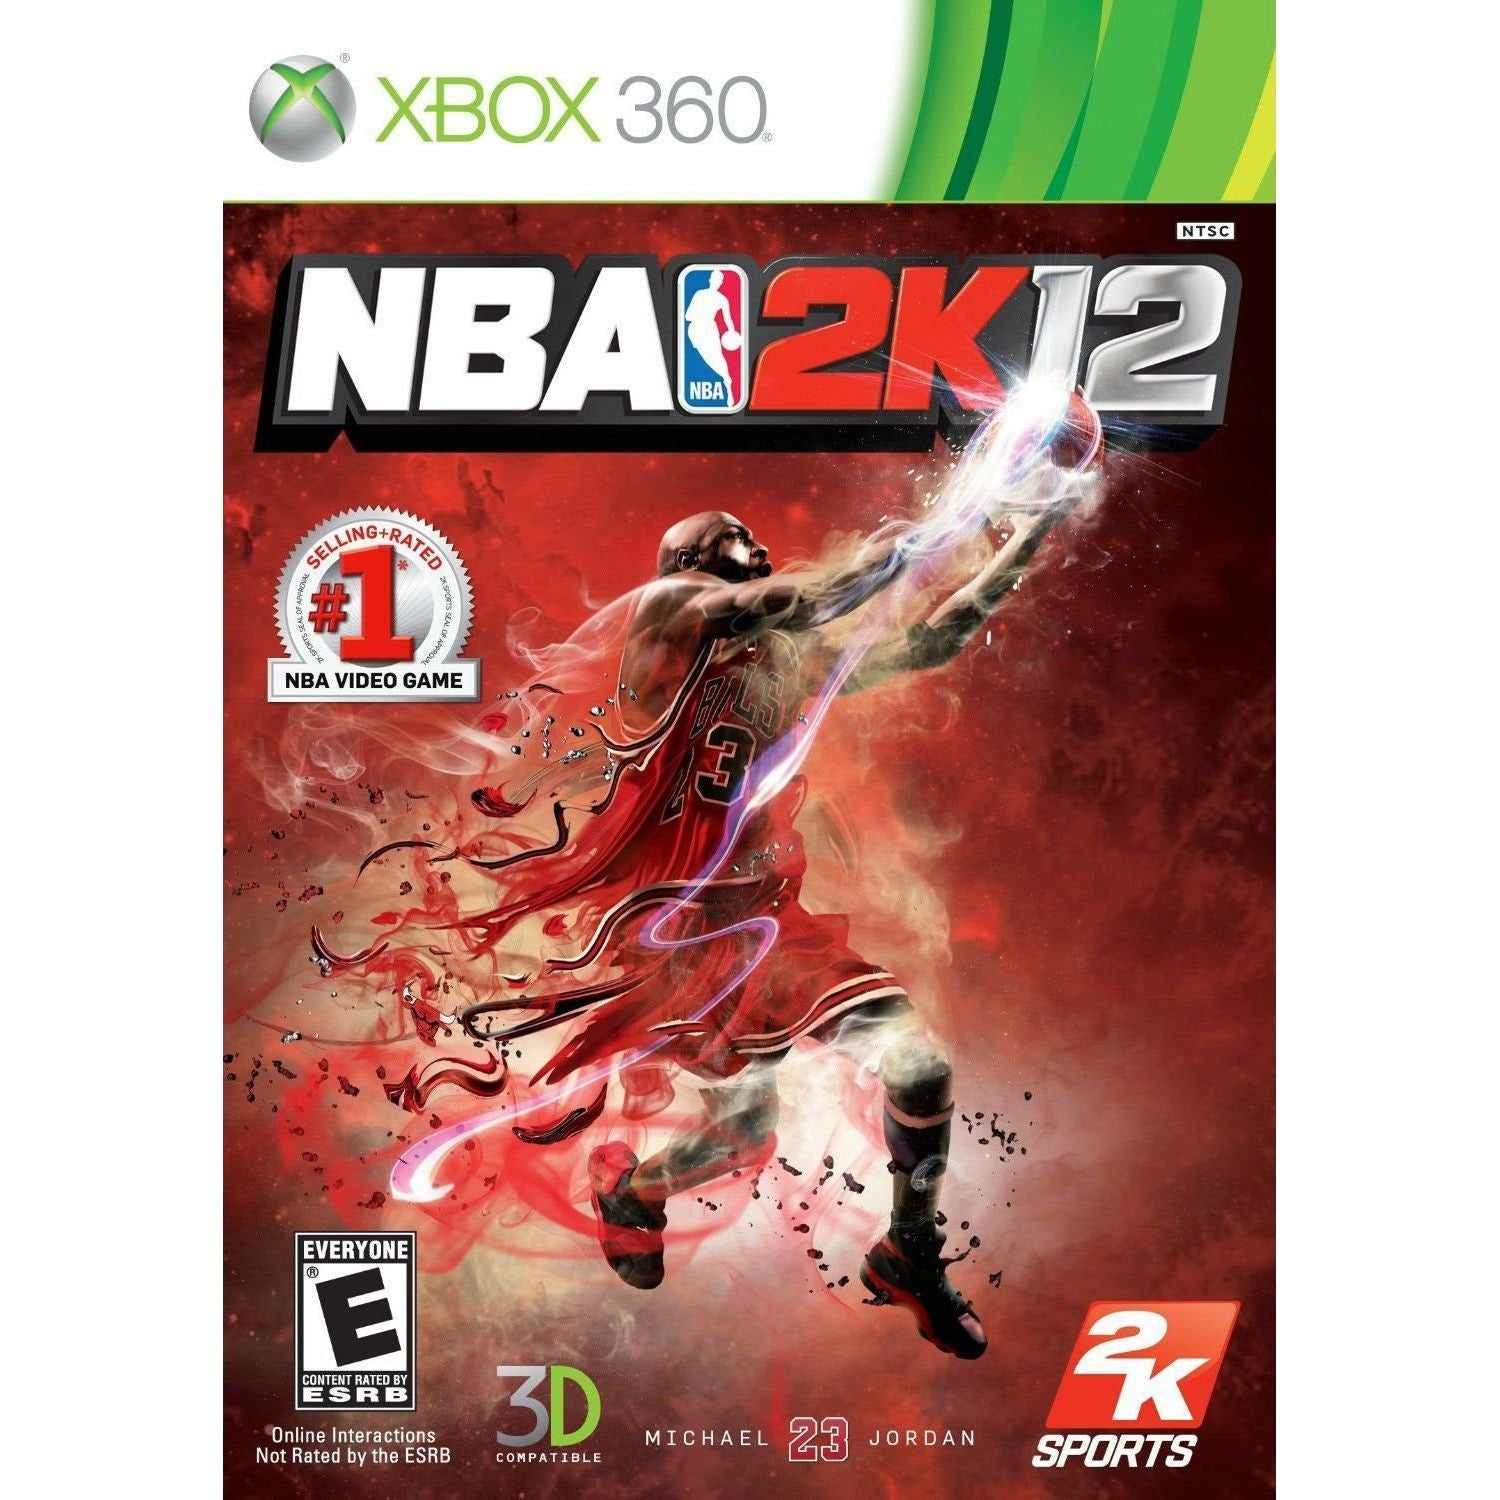 XBOX 360 - NBA 2K12